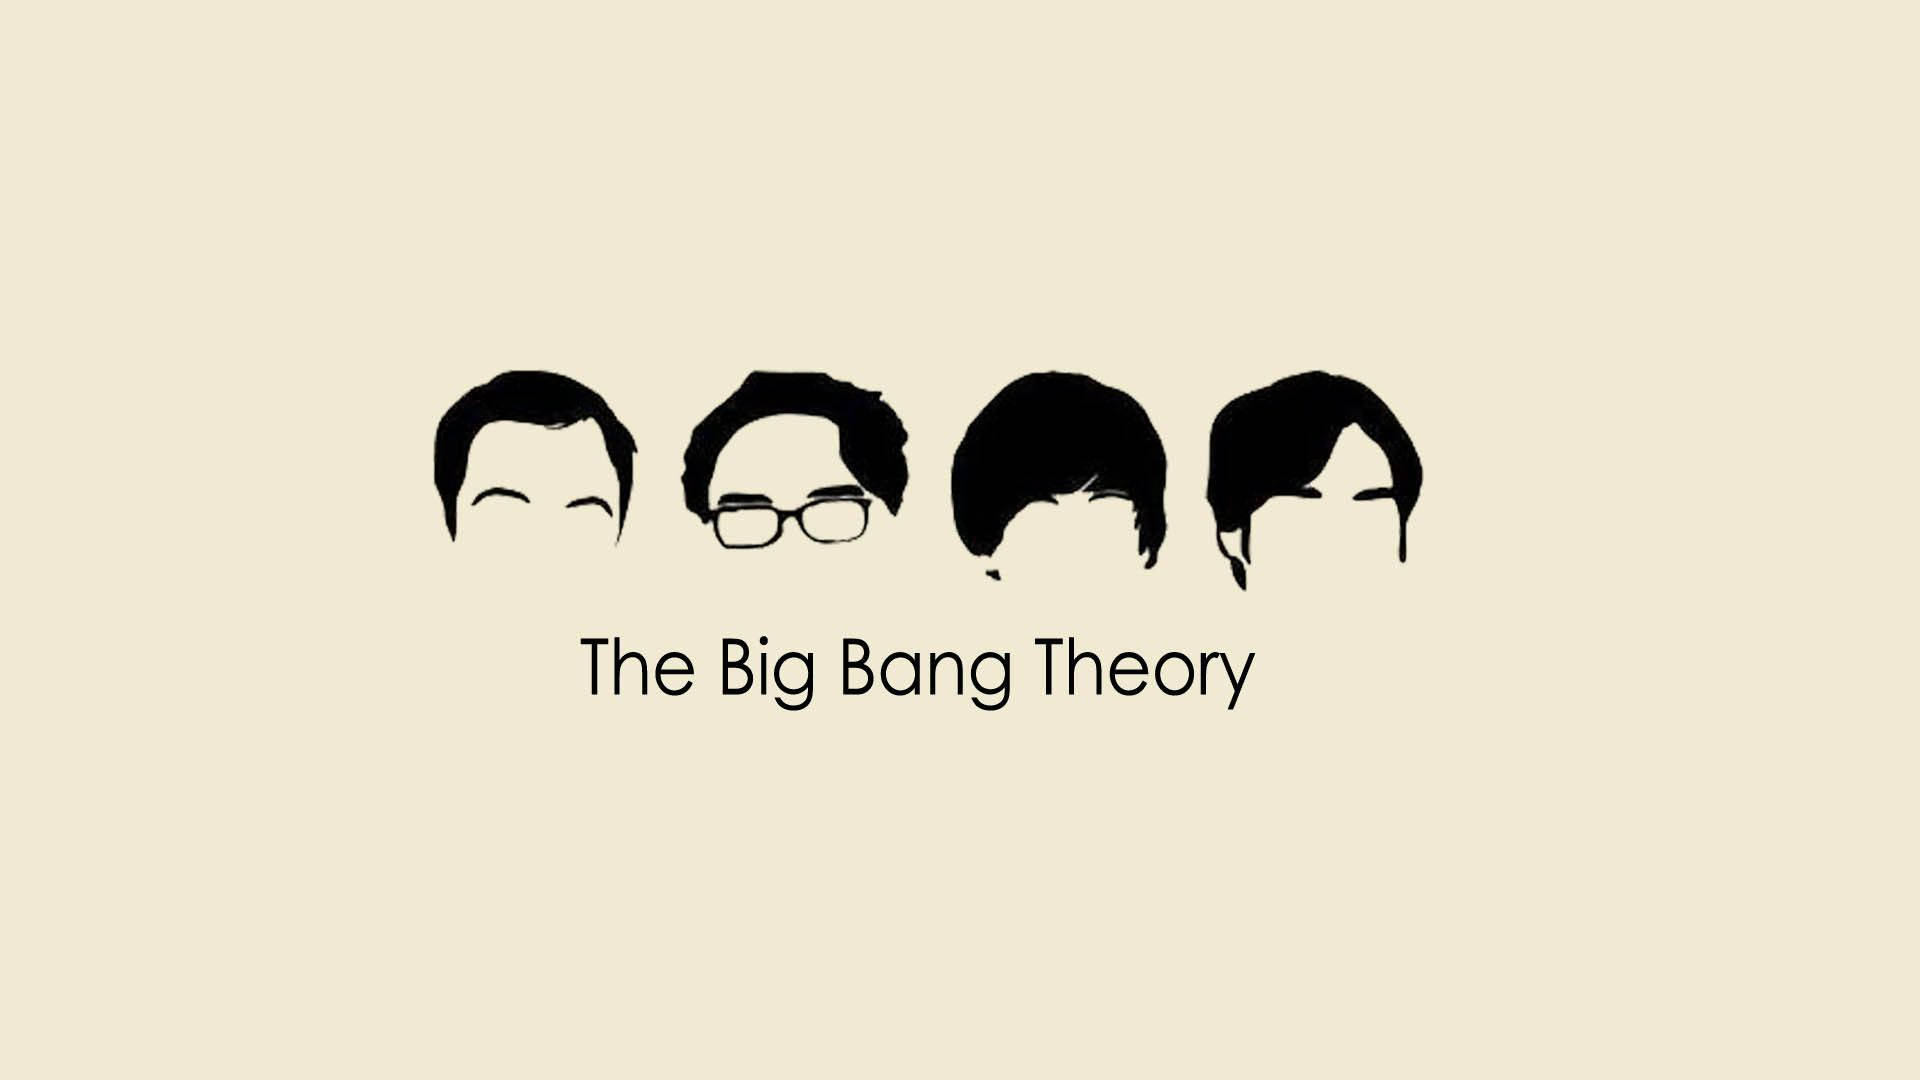 The Big Bang Theory Minimalist Illustration Background